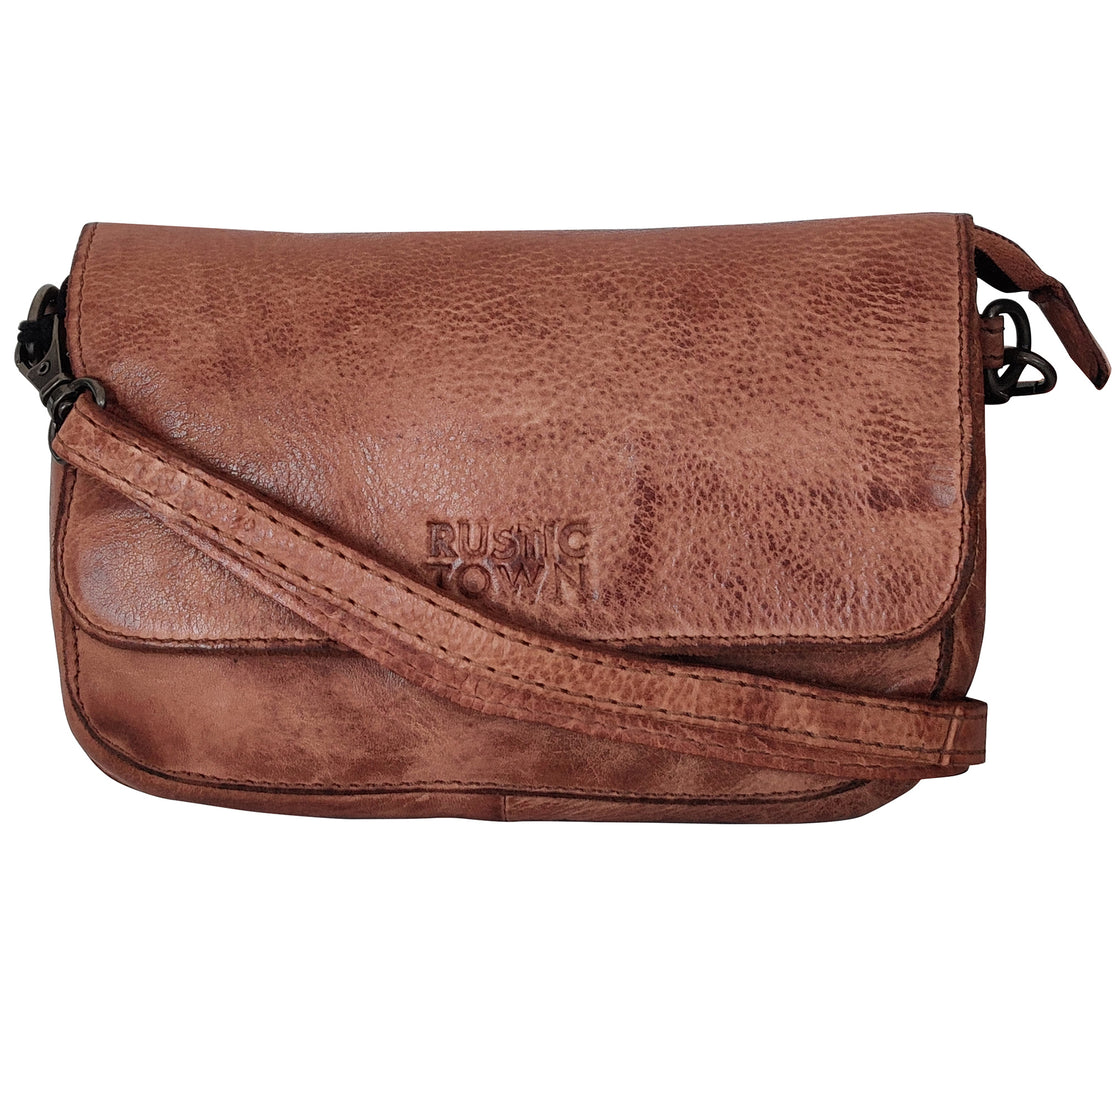 handbags,Luxury purses,soft leather clutch,ladies hand bags,